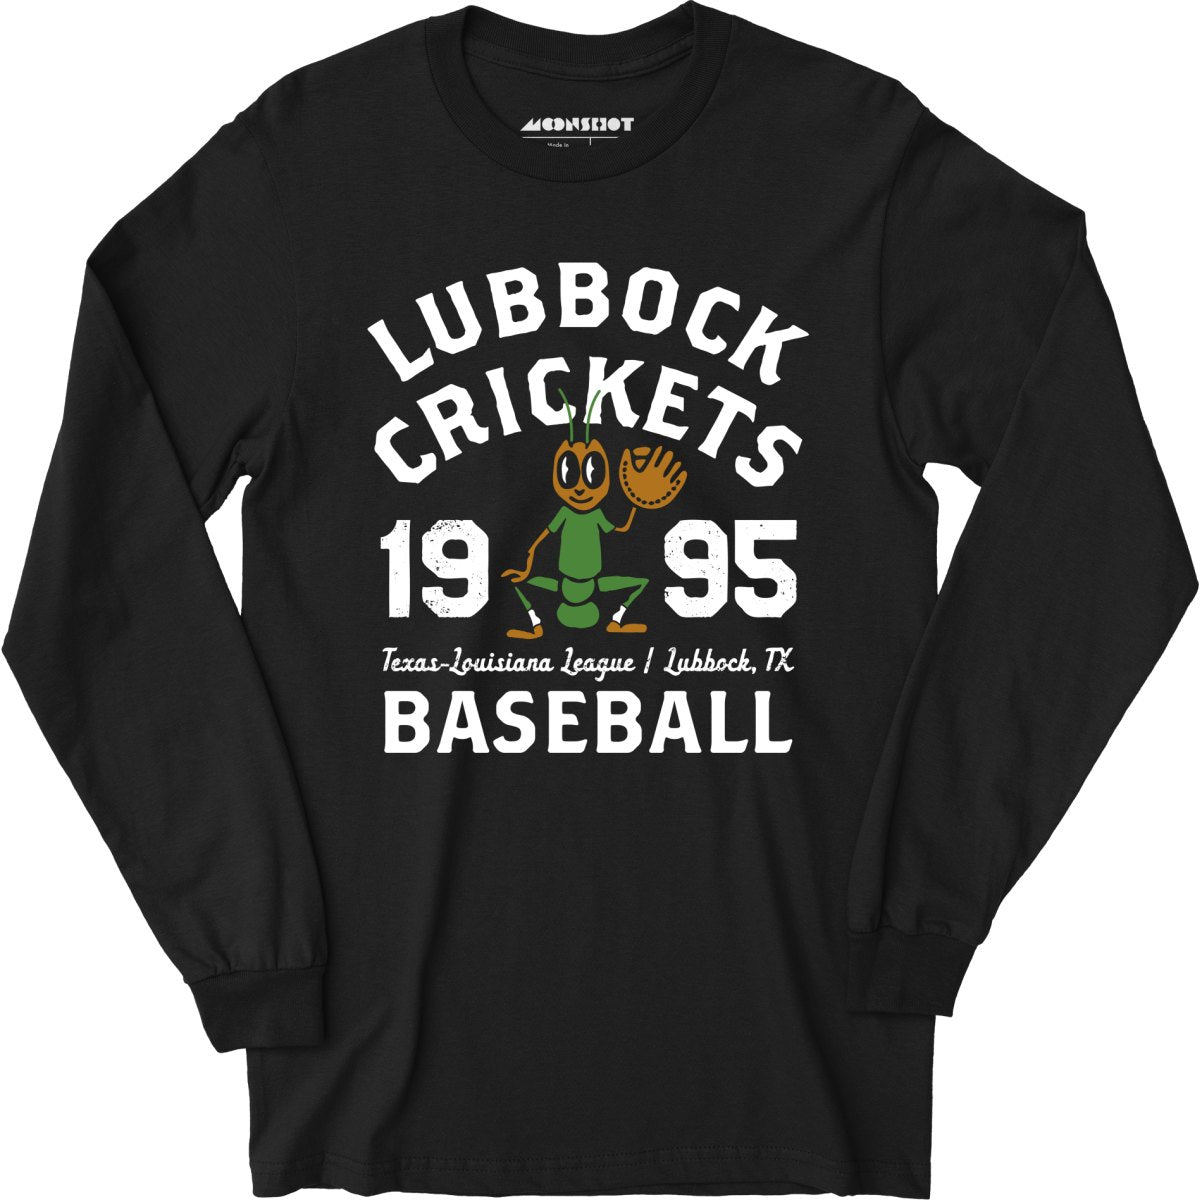 Lubbock Crickets - Texas - Vintage Defunct Baseball Teams - Long Sleeve T-Shirt